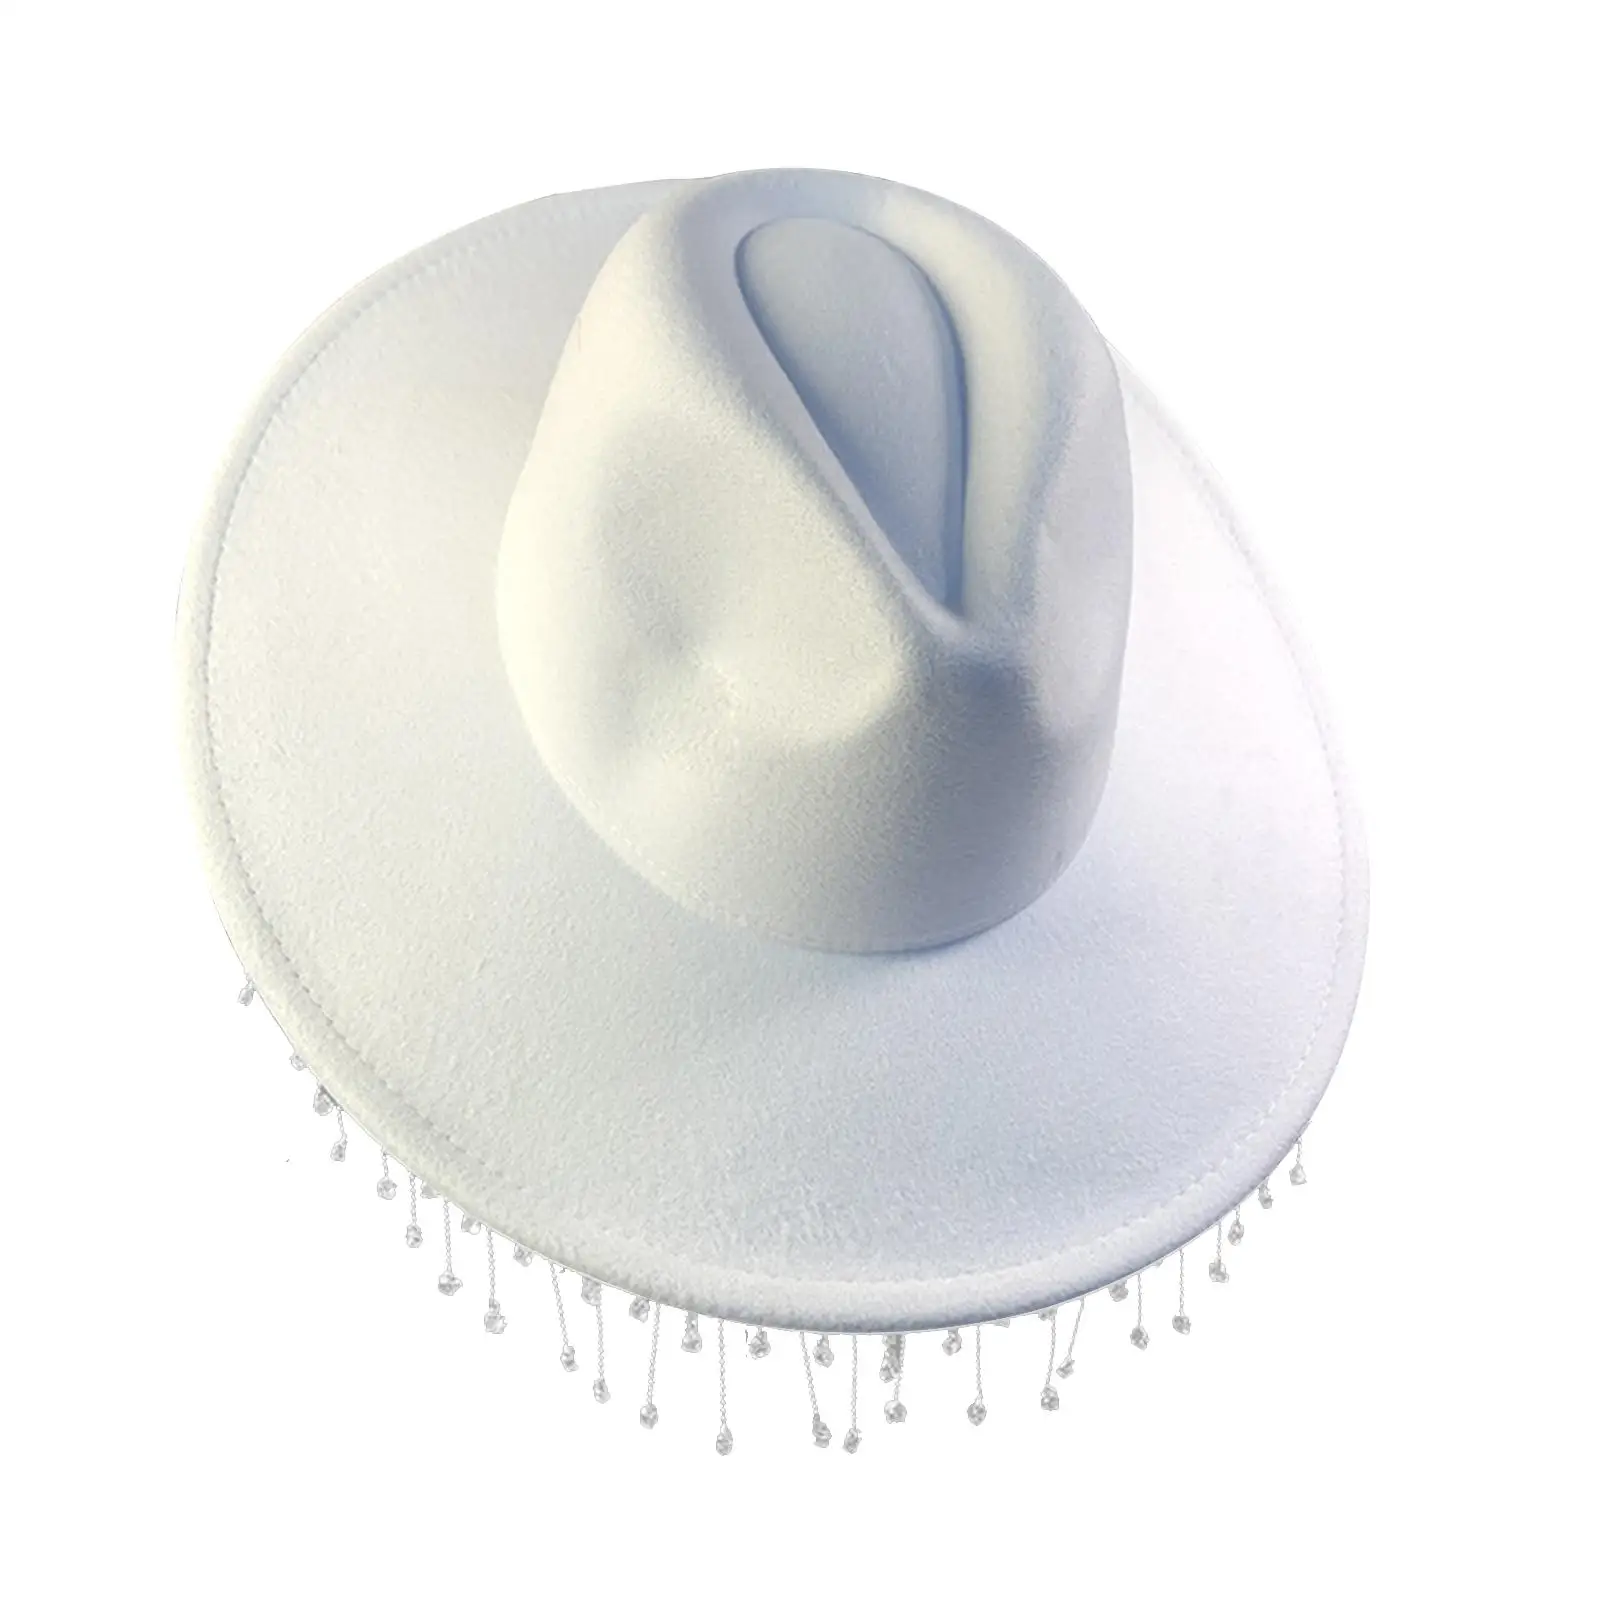 Felt Cowboy Hat Jazz Top Hat Unisex Adult for Costume Clothes Accessories